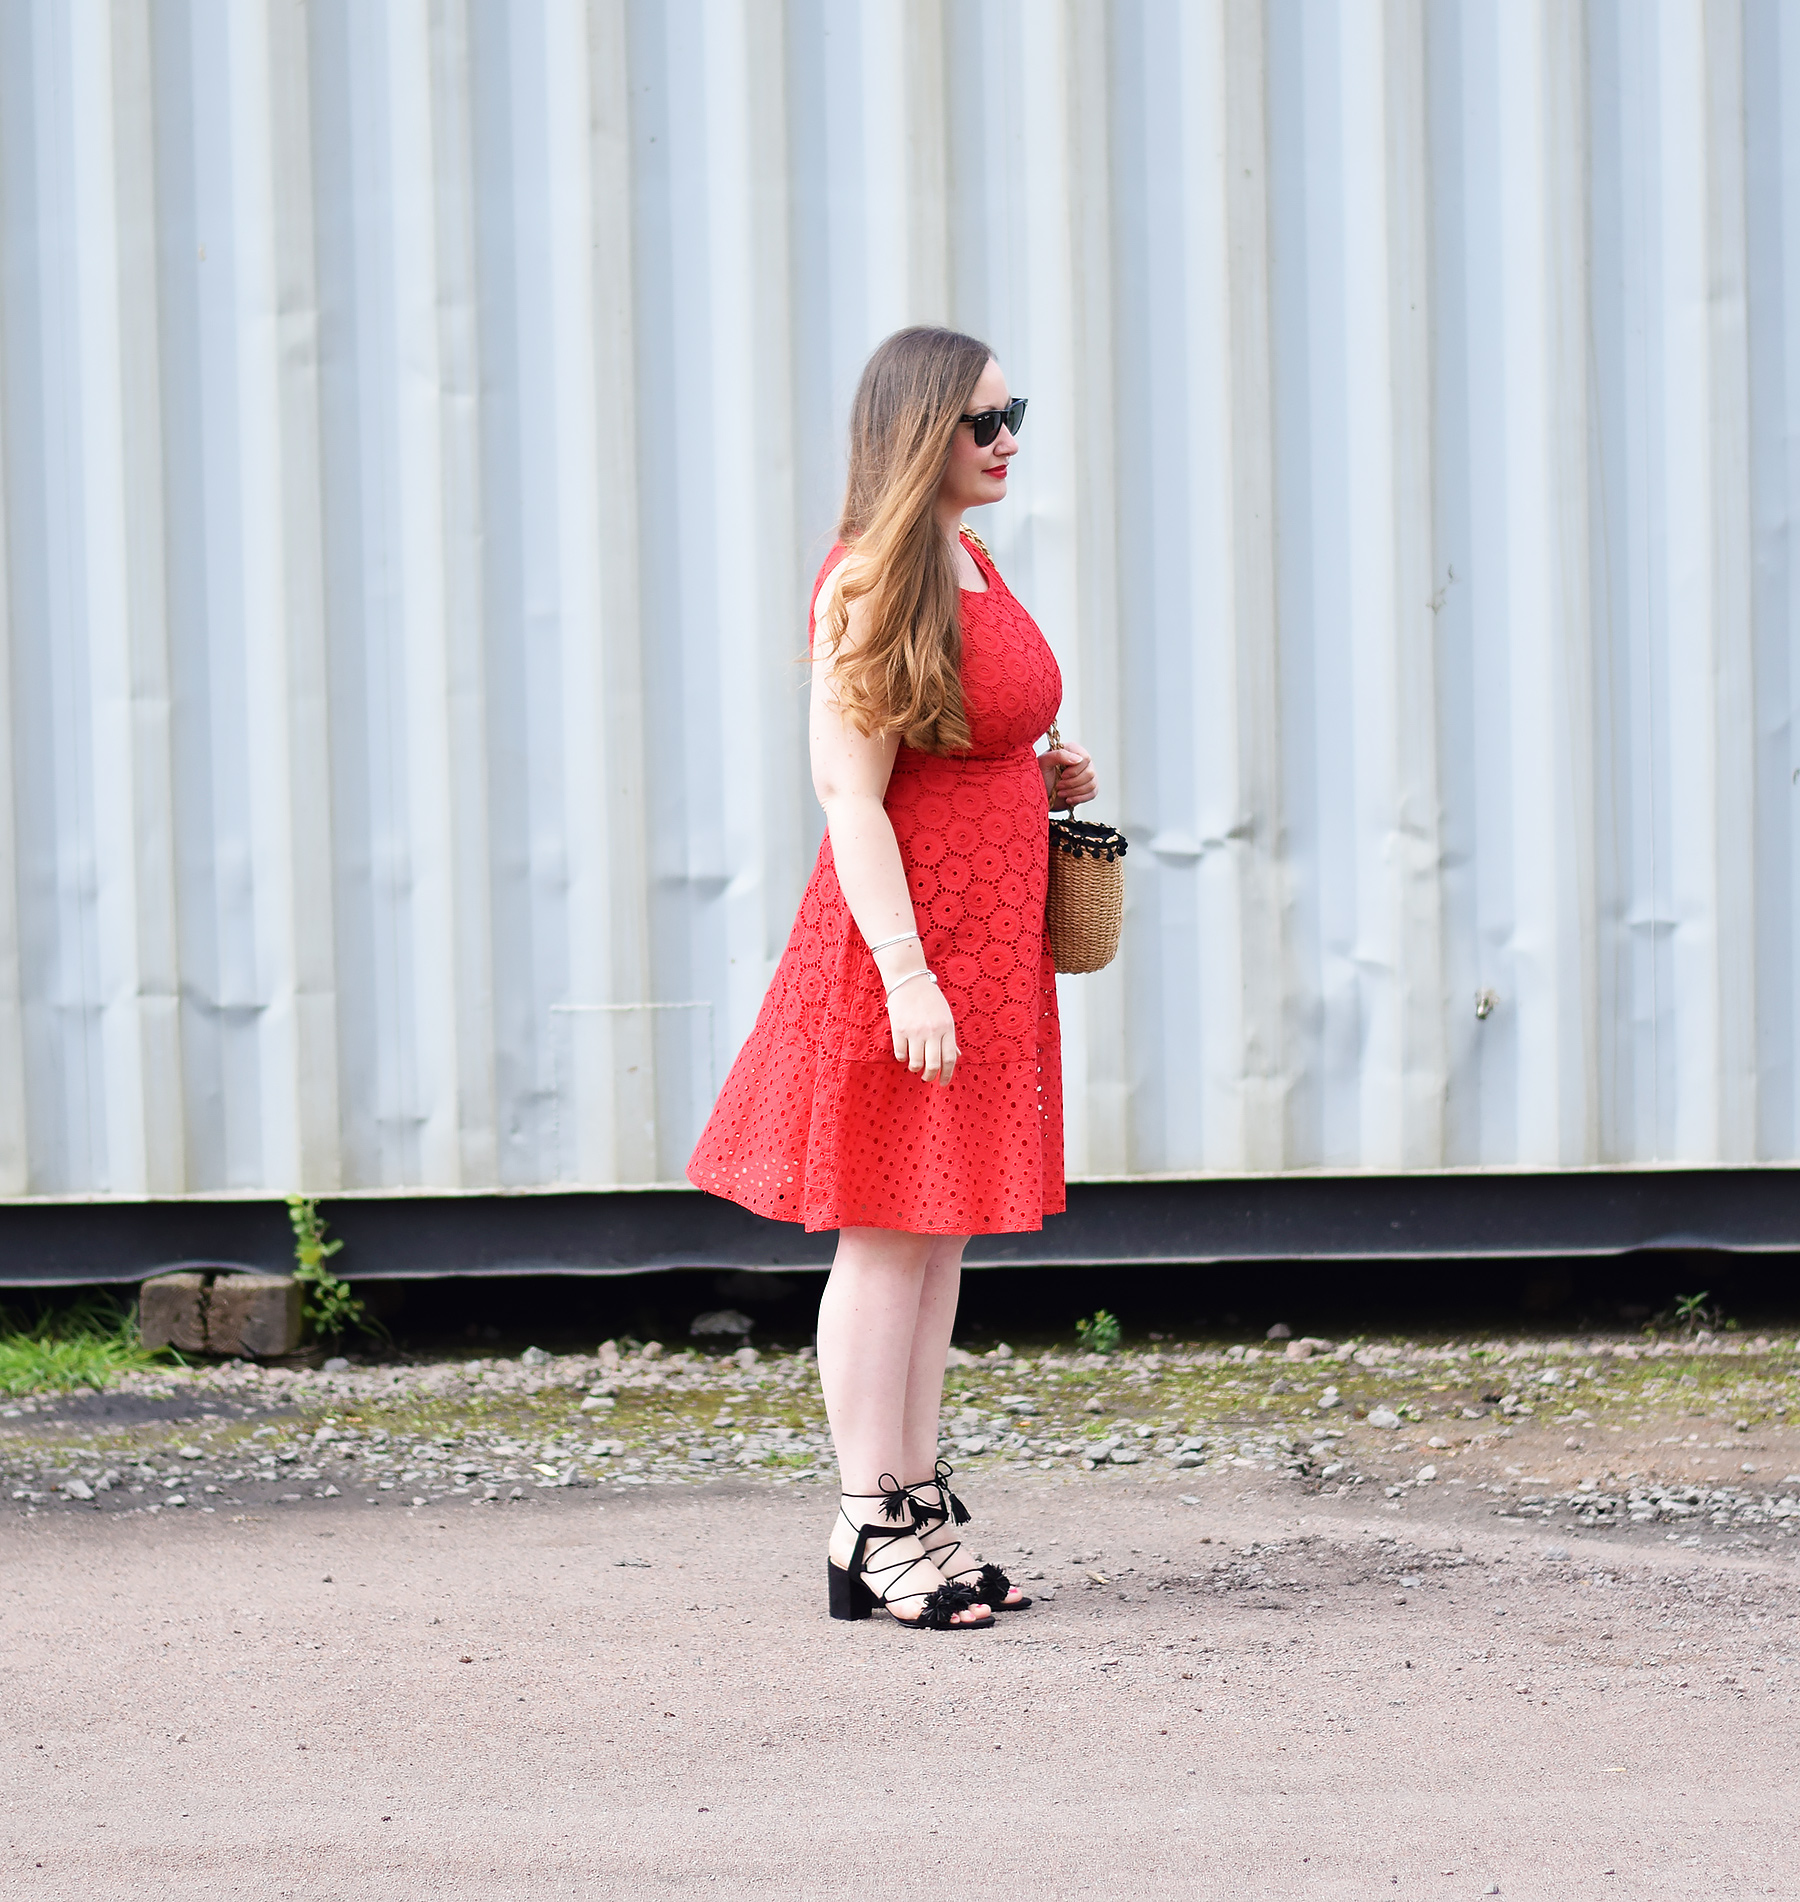 The prettiest red summer dress